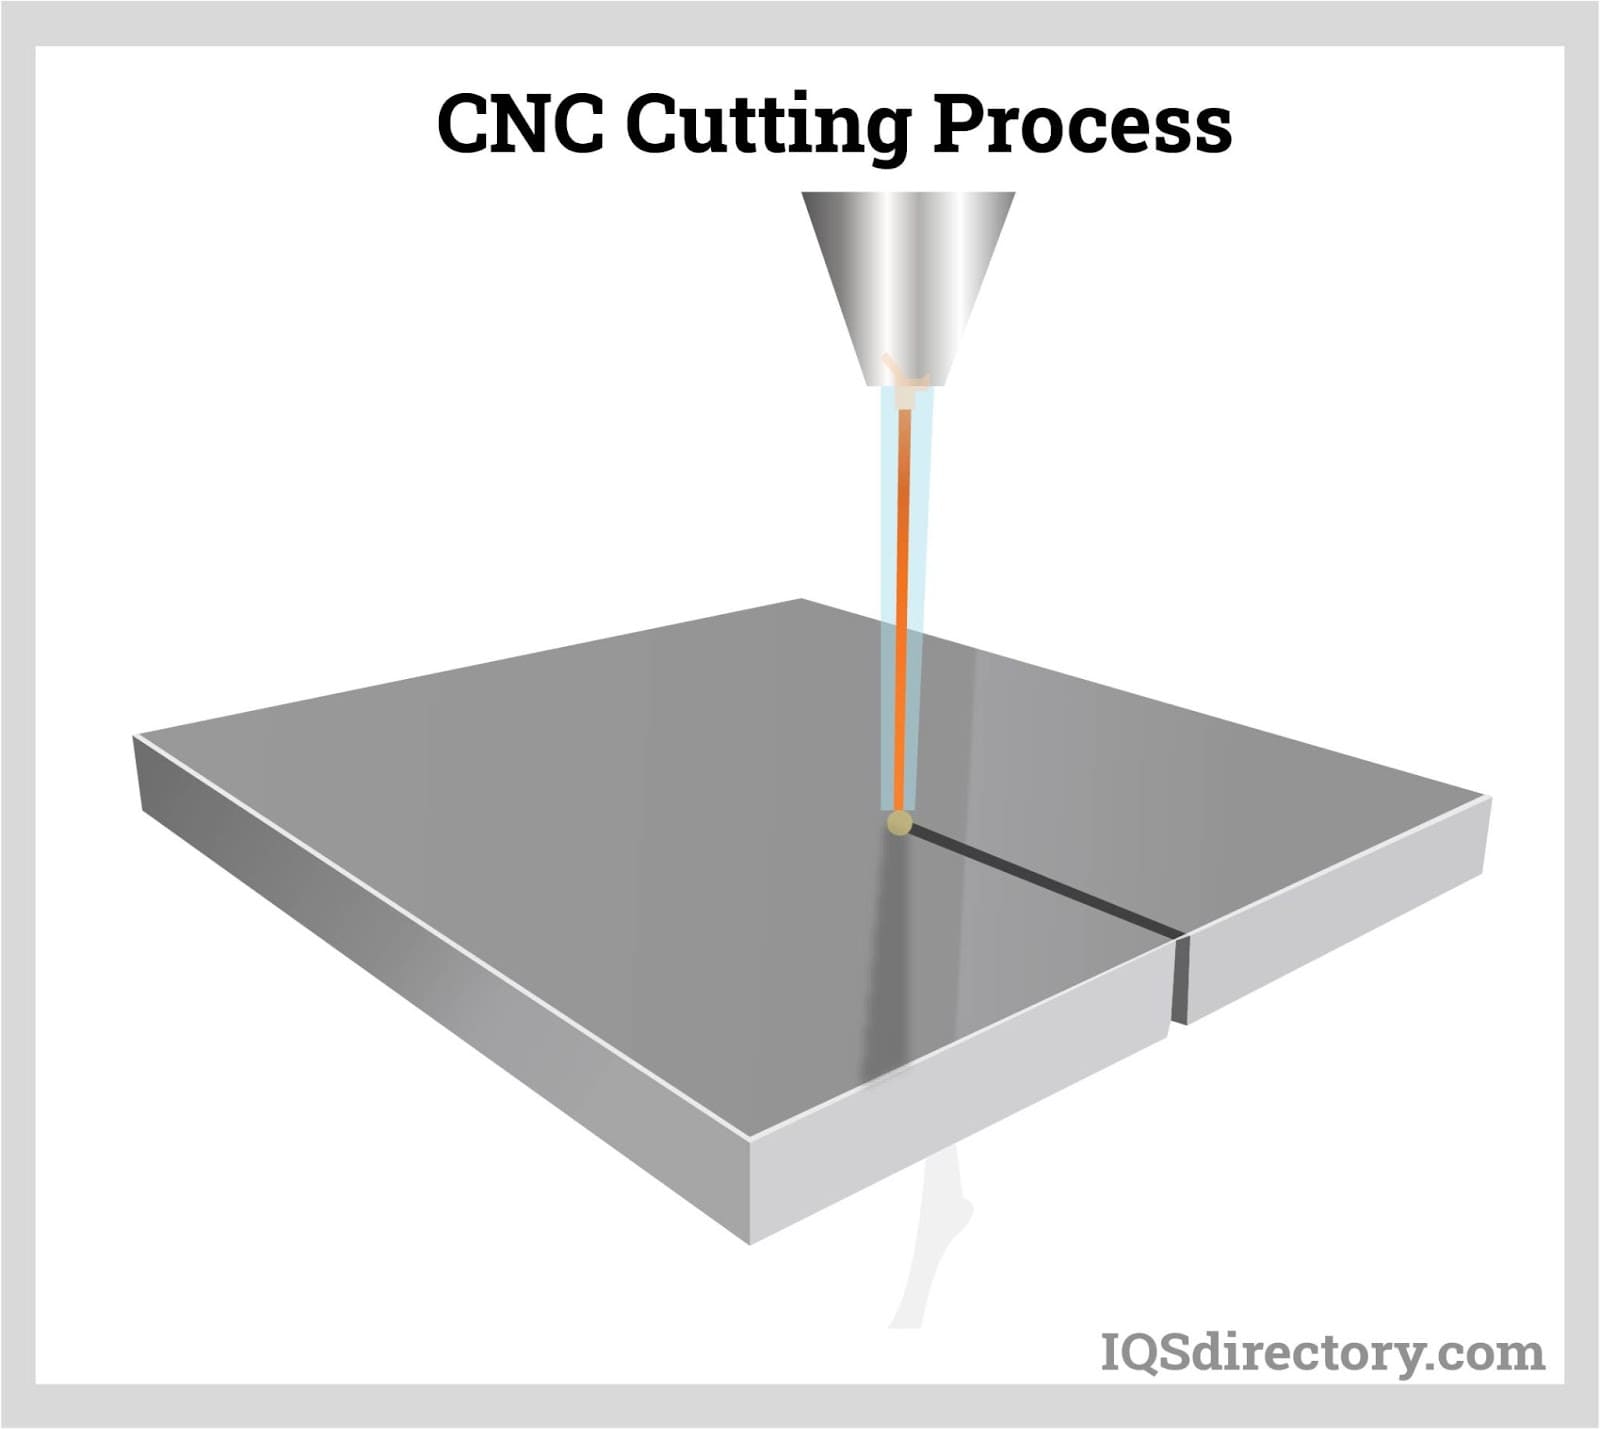 CNC Cutting Process